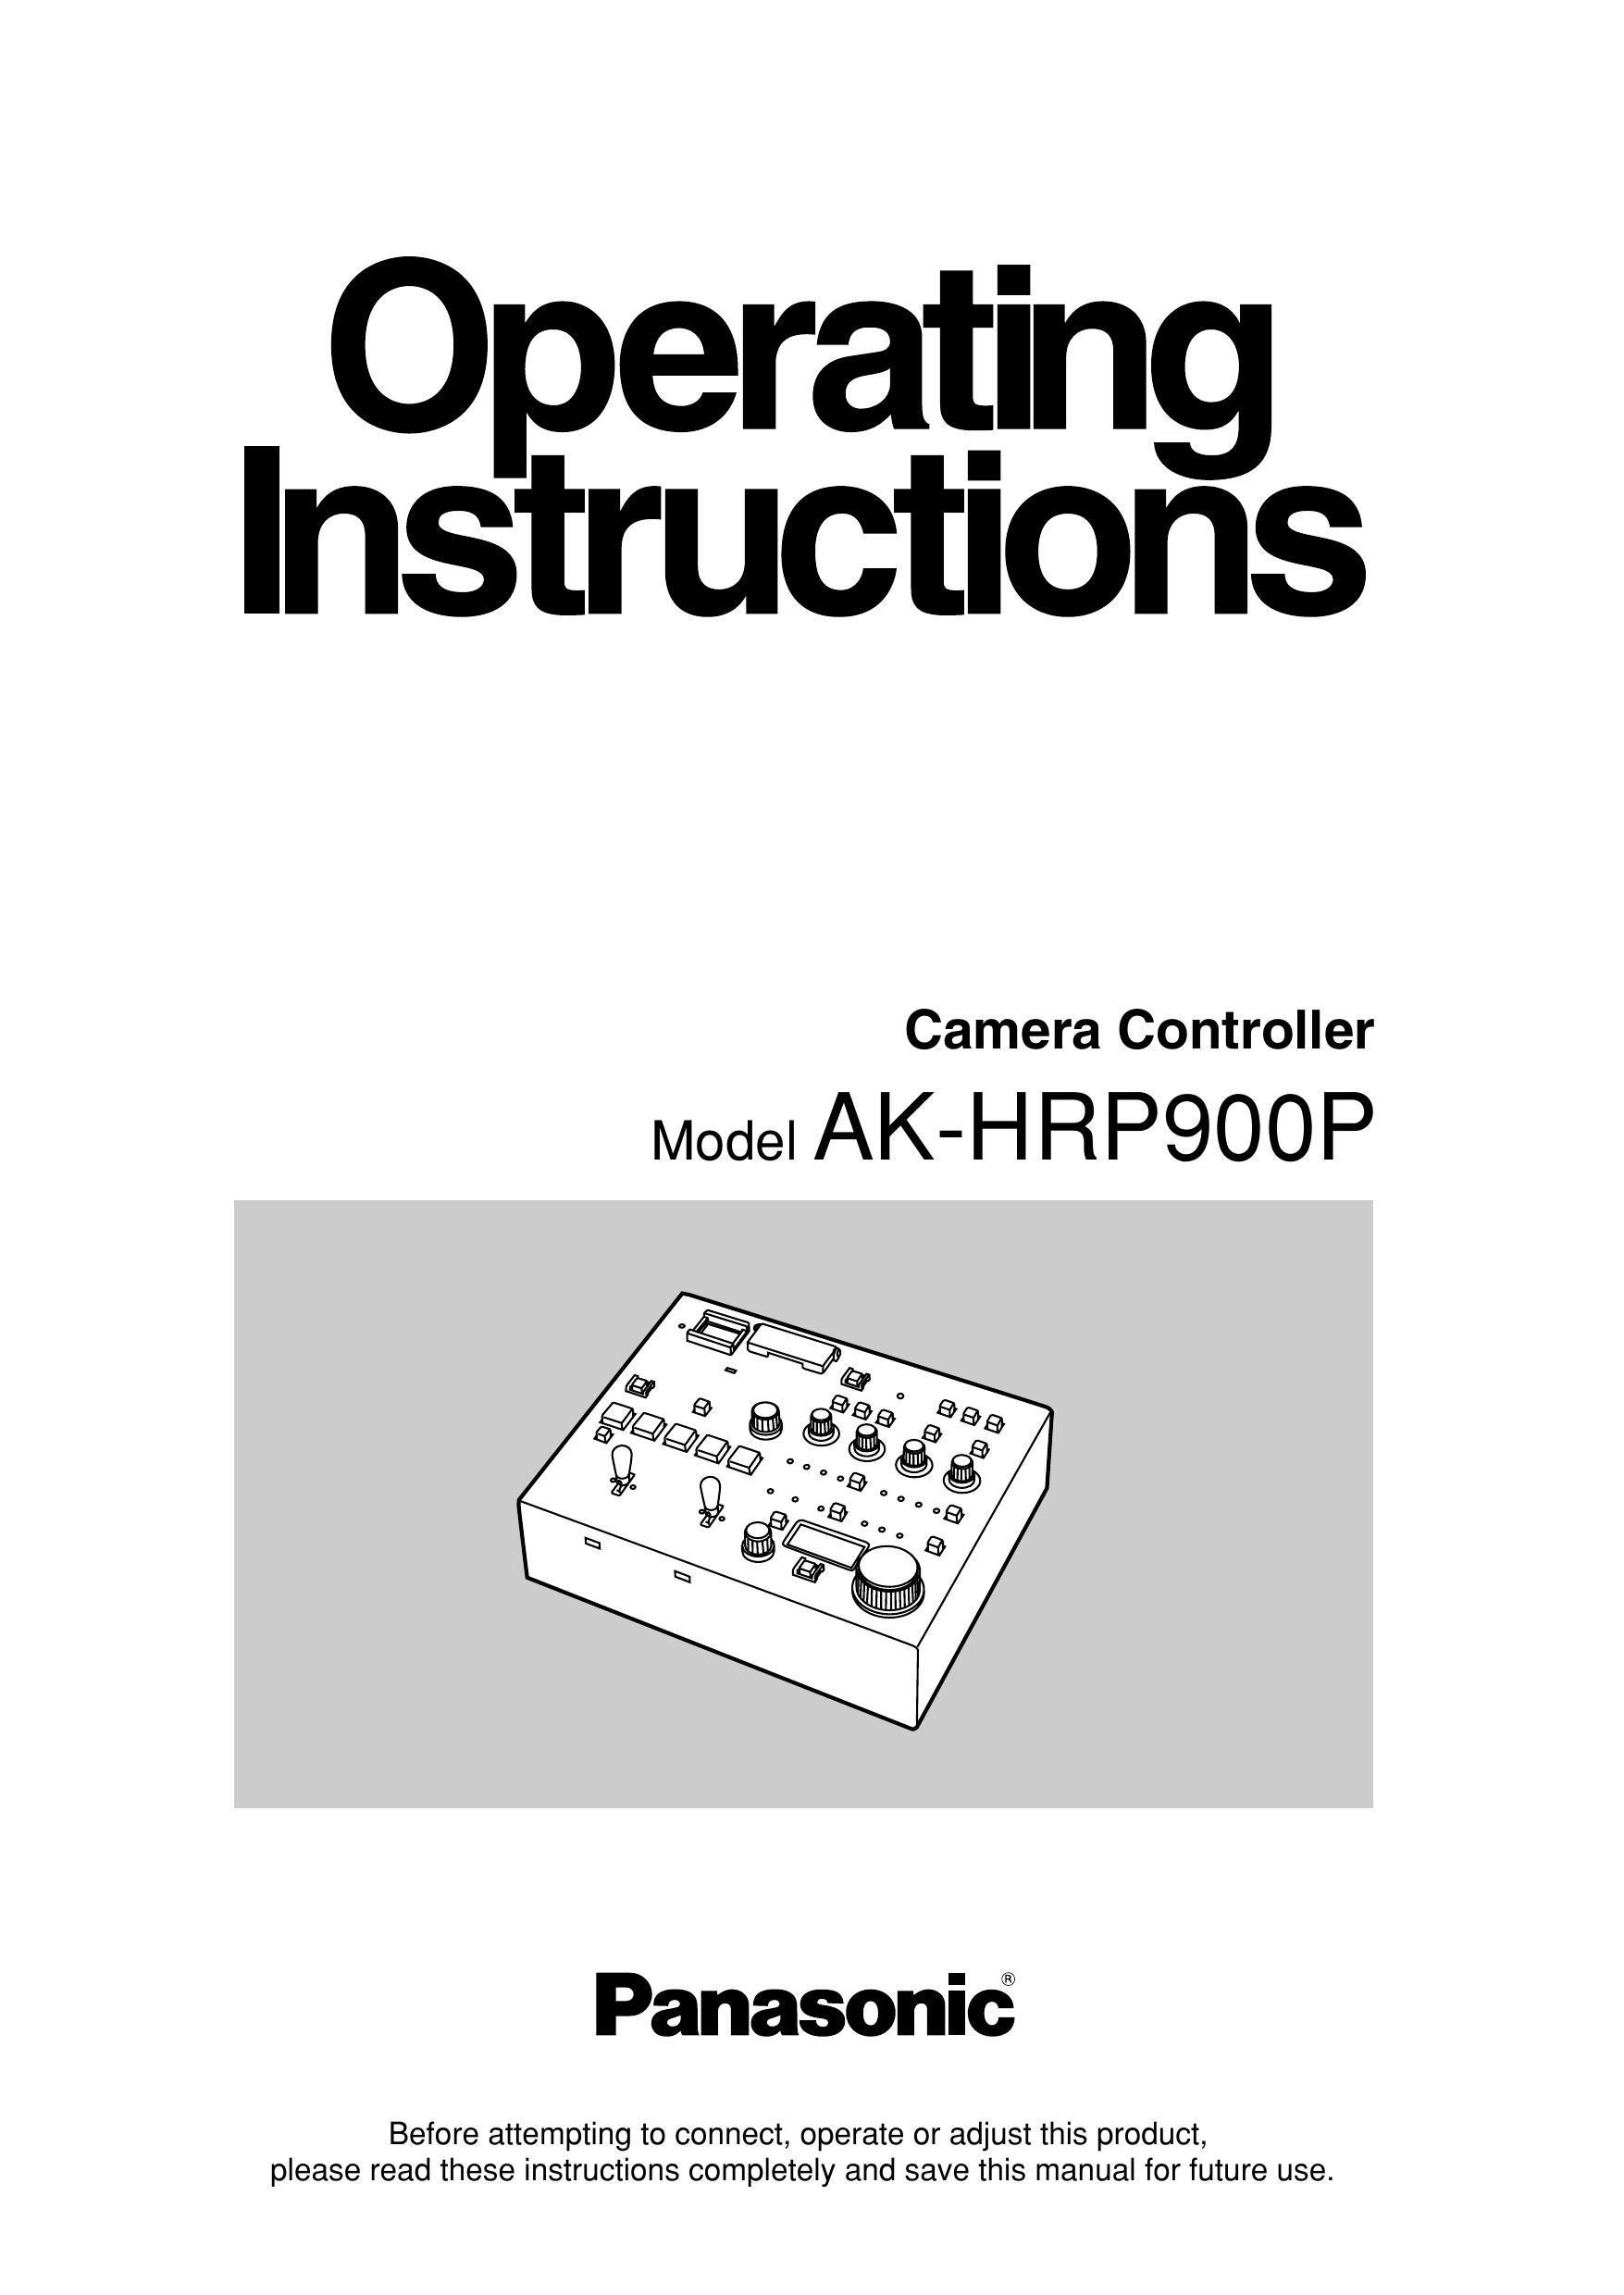 Panasonic AK-HRP900P Security Camera User Manual